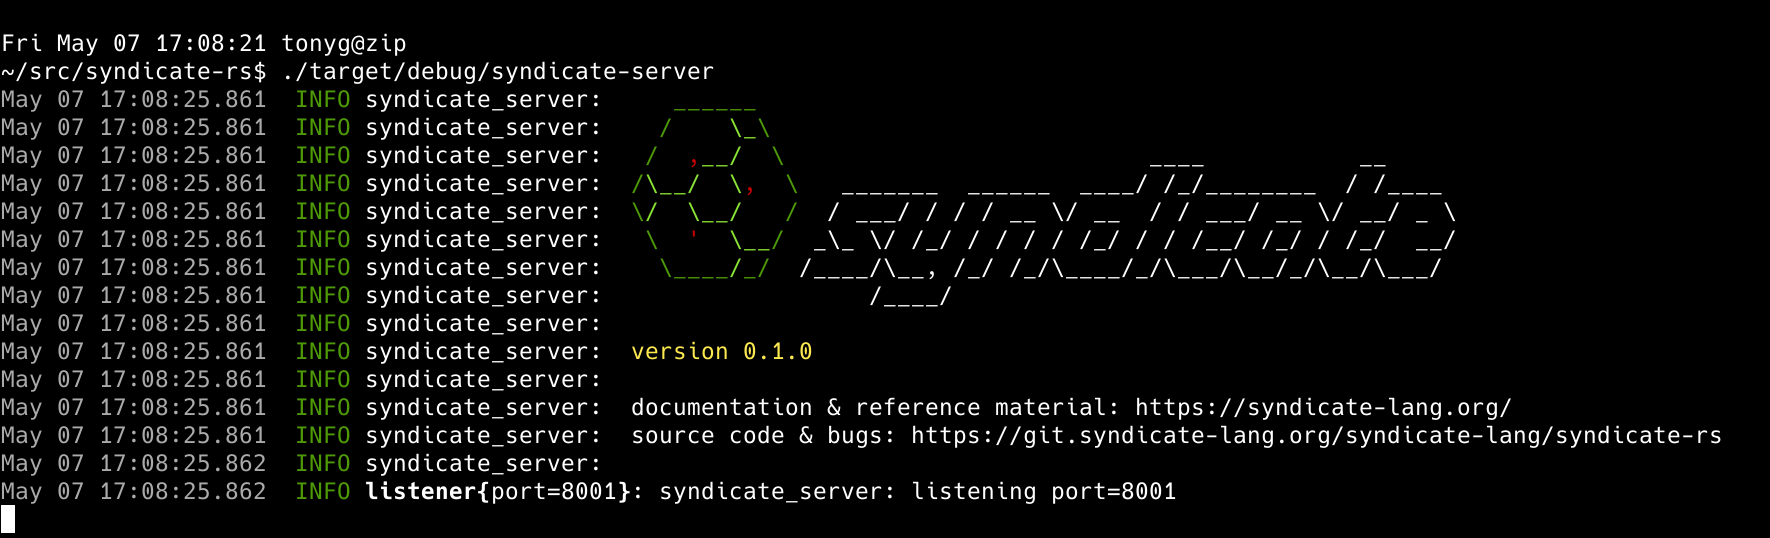 Screenshot of the server running